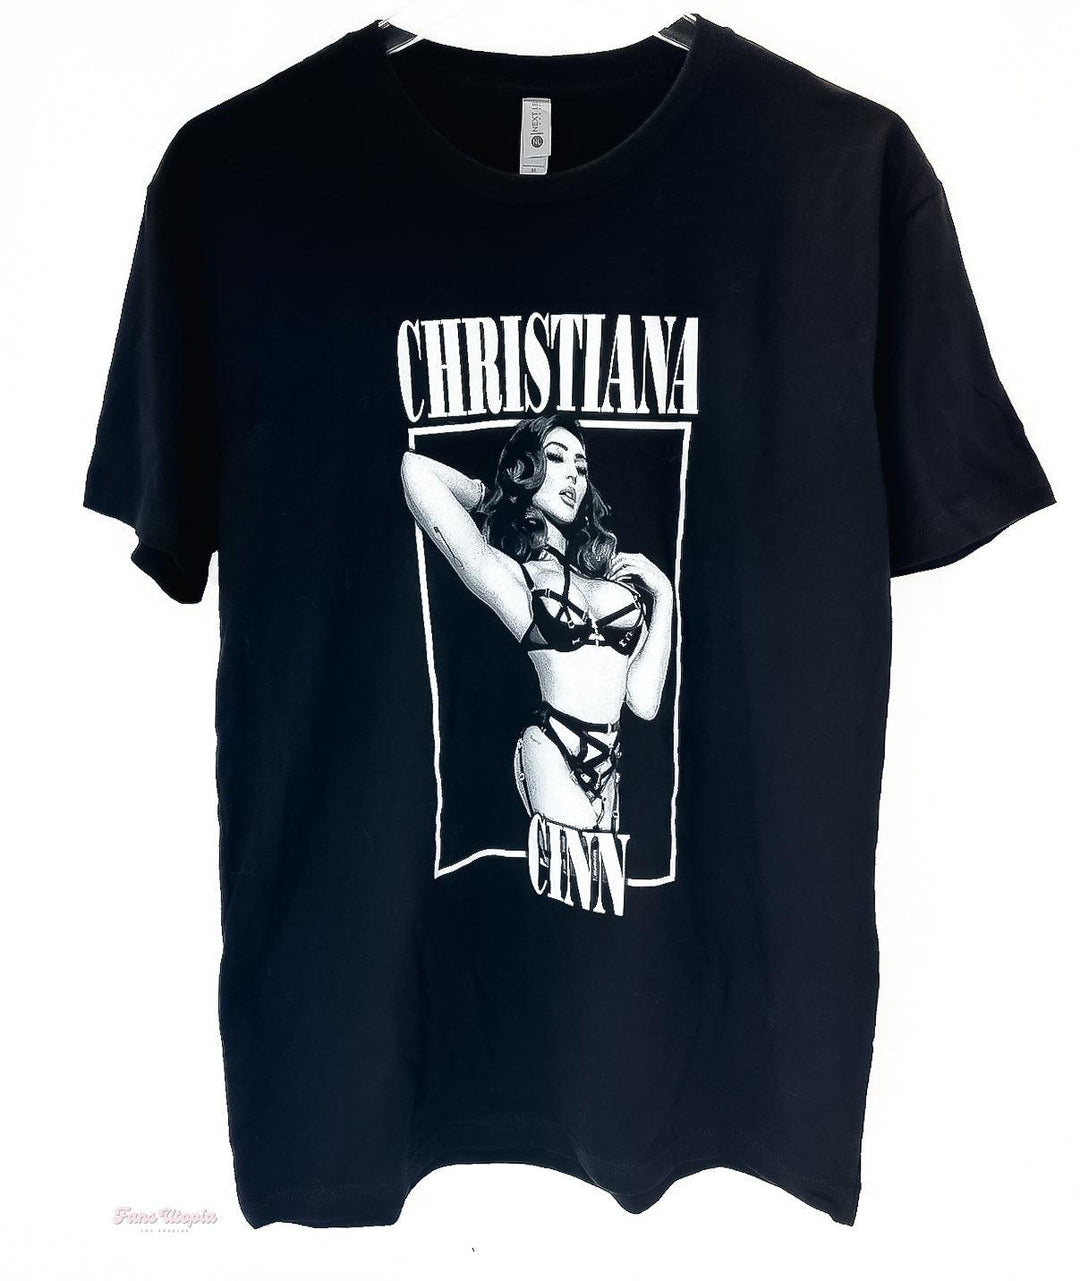 Christiana Cinn Black T-Shirt - FANS UTOPIA